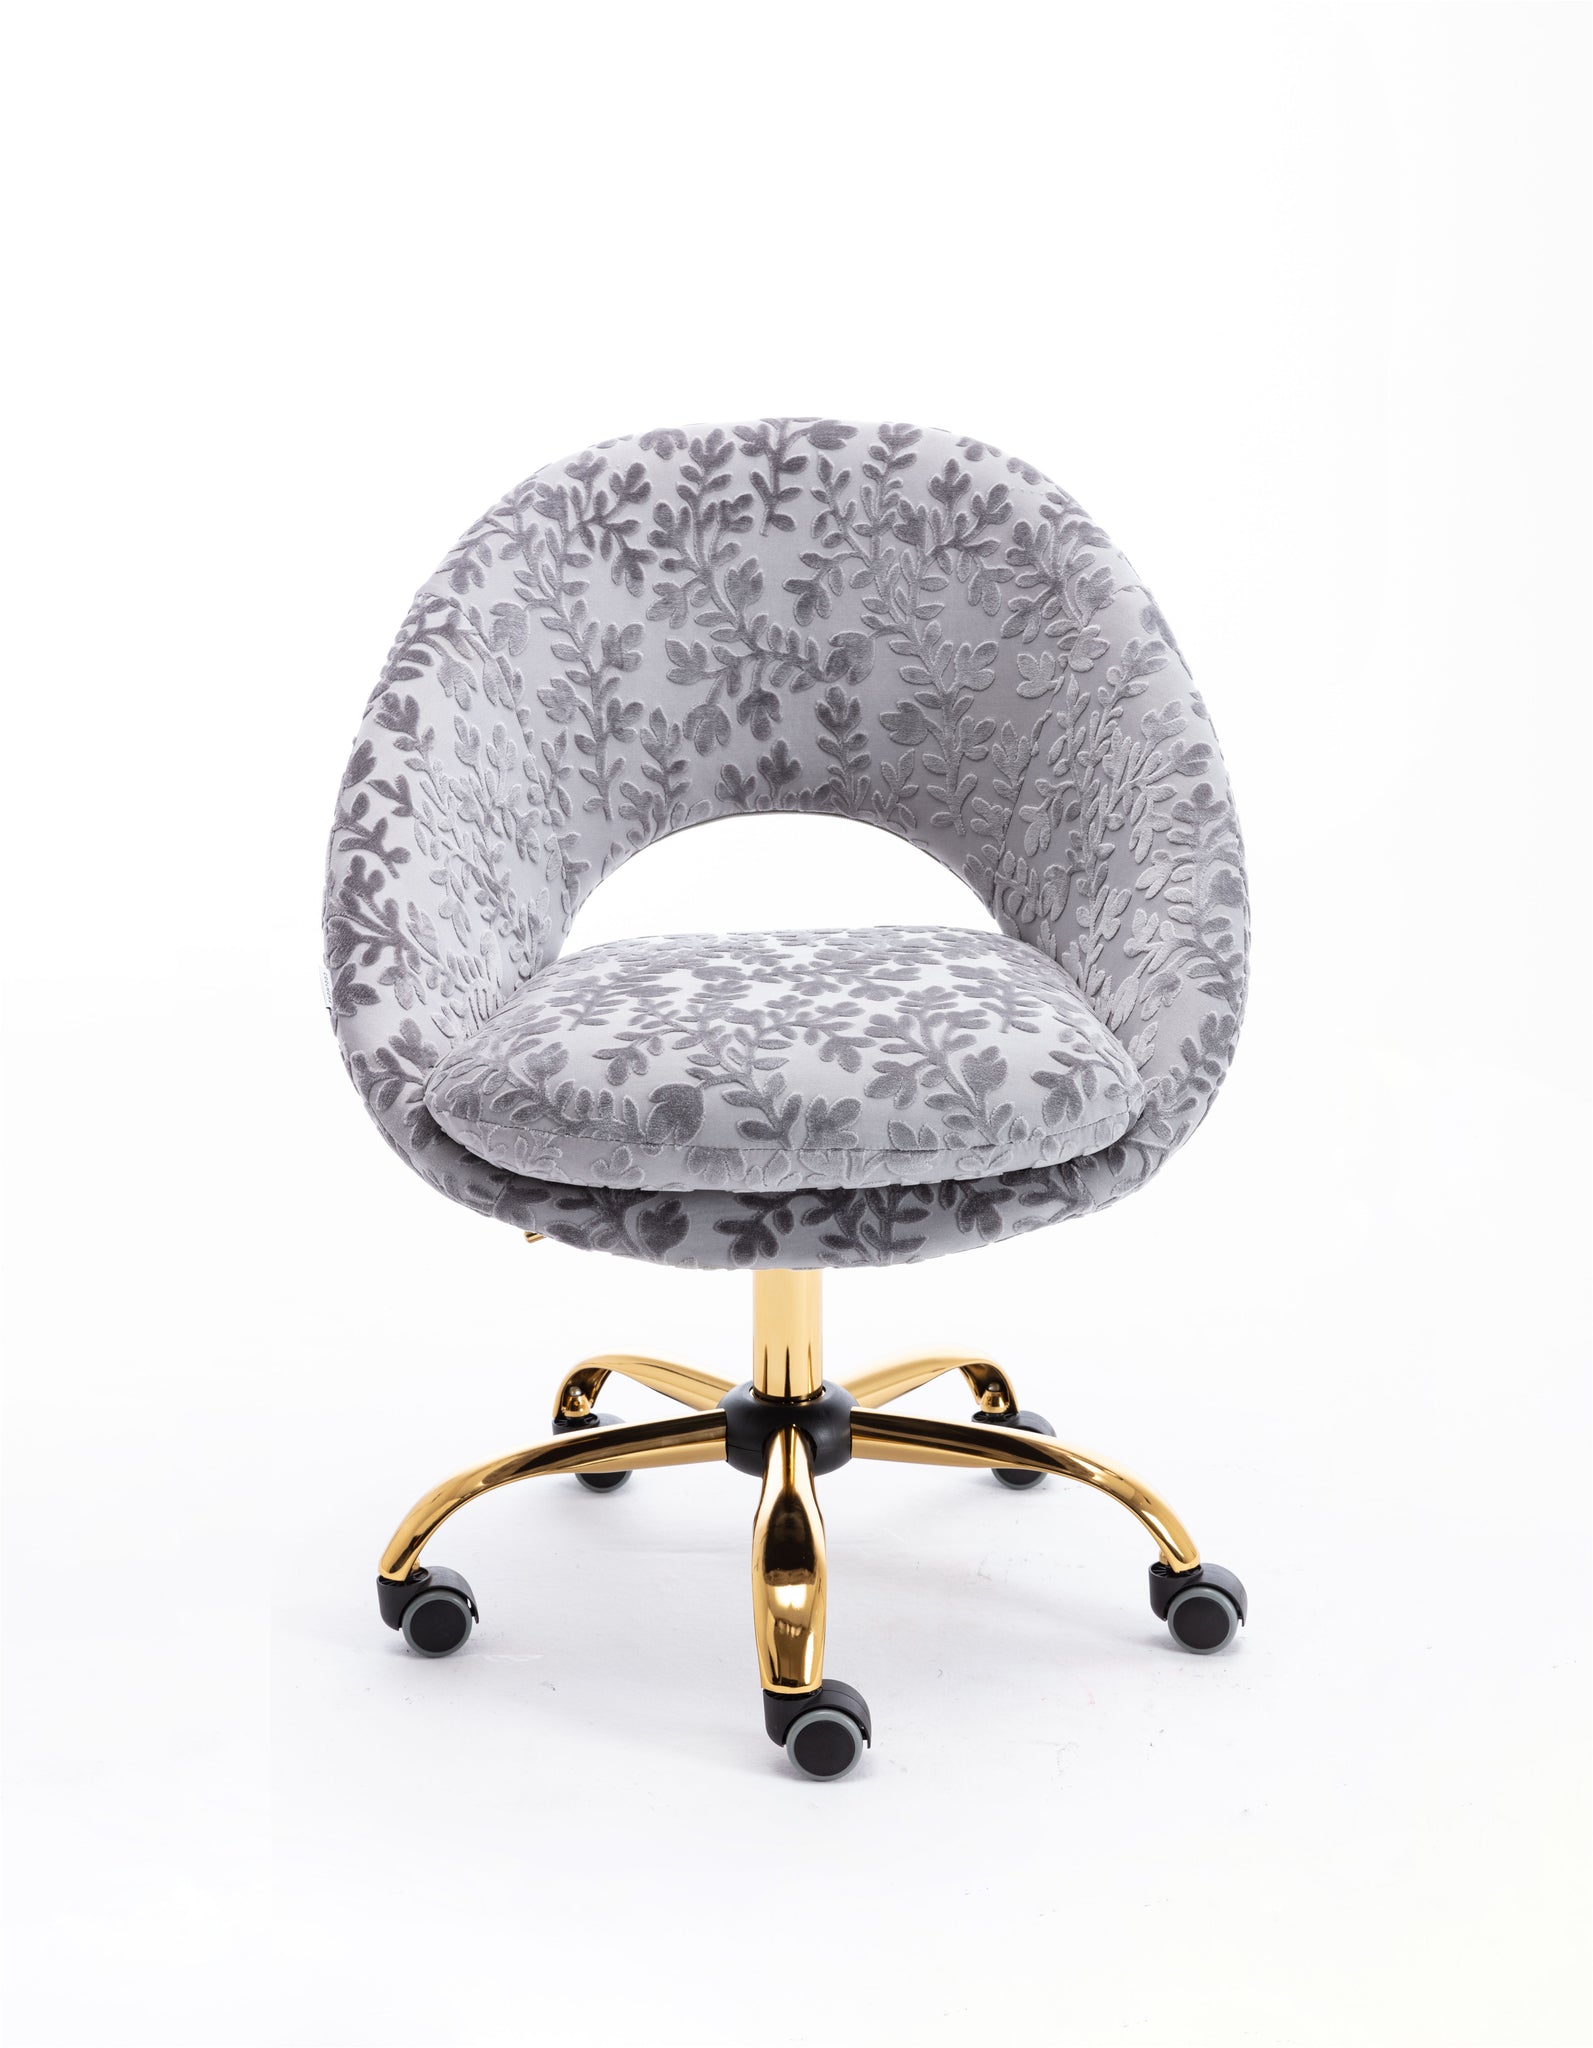 Grey Swivel Office Chair